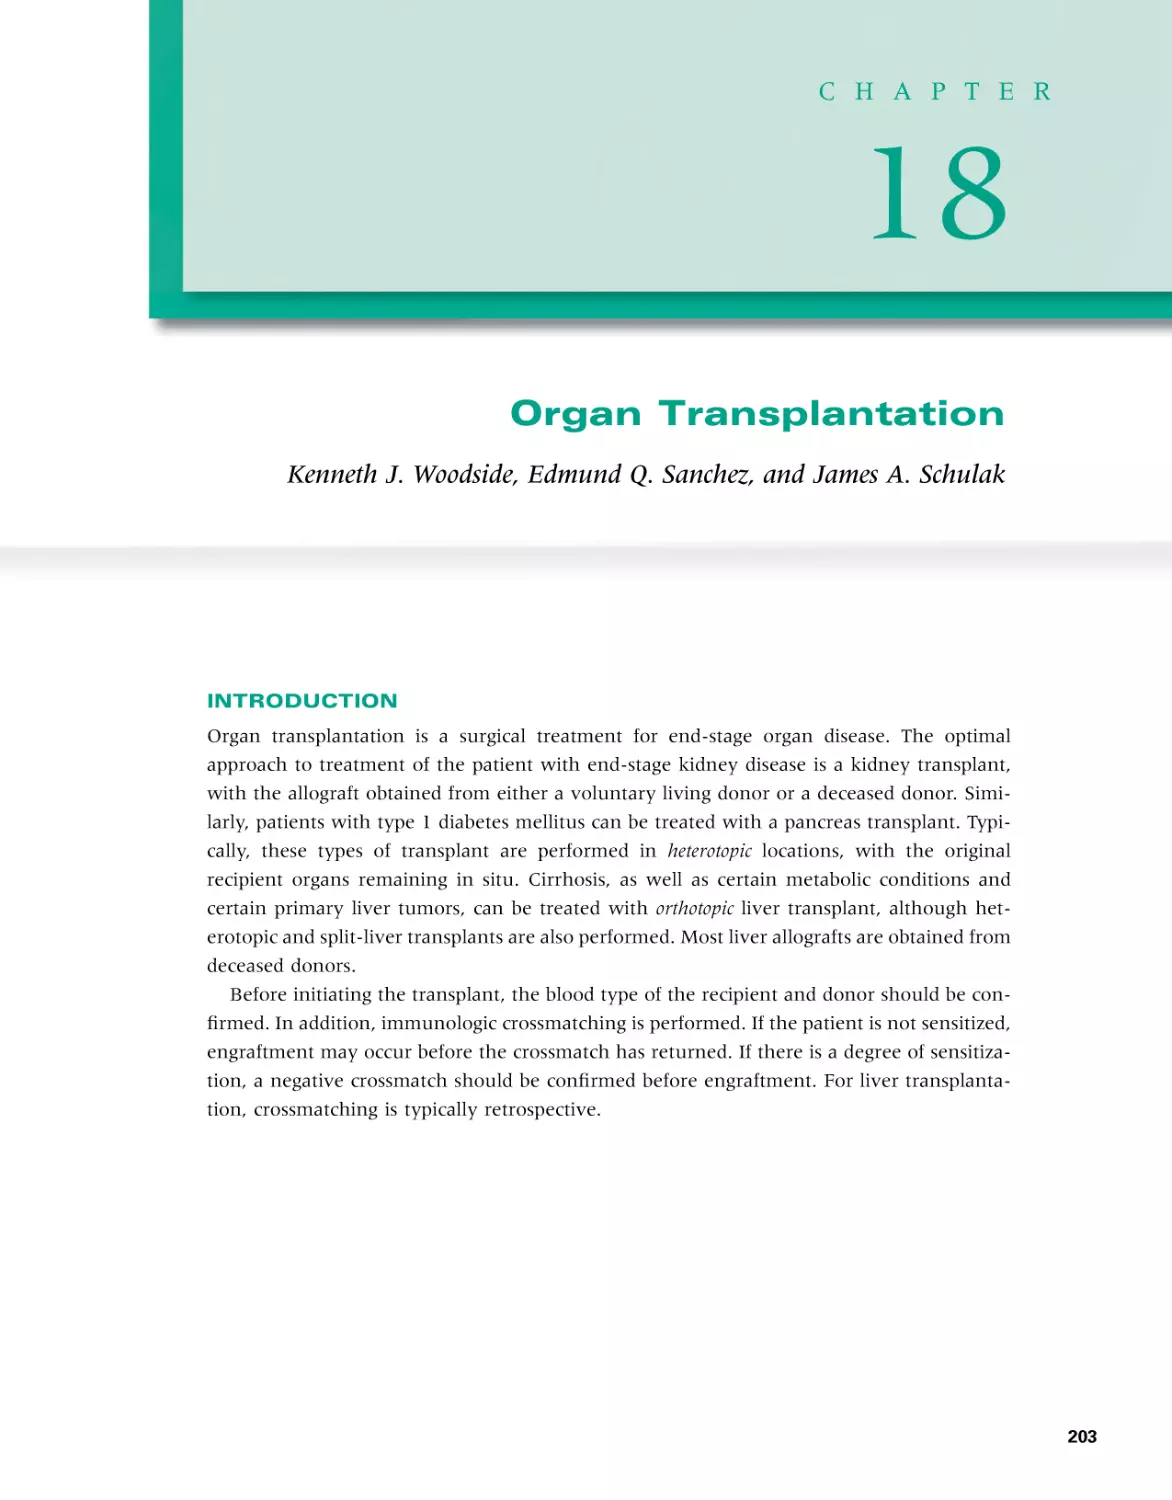 18 Organ Transplantation
Introduction